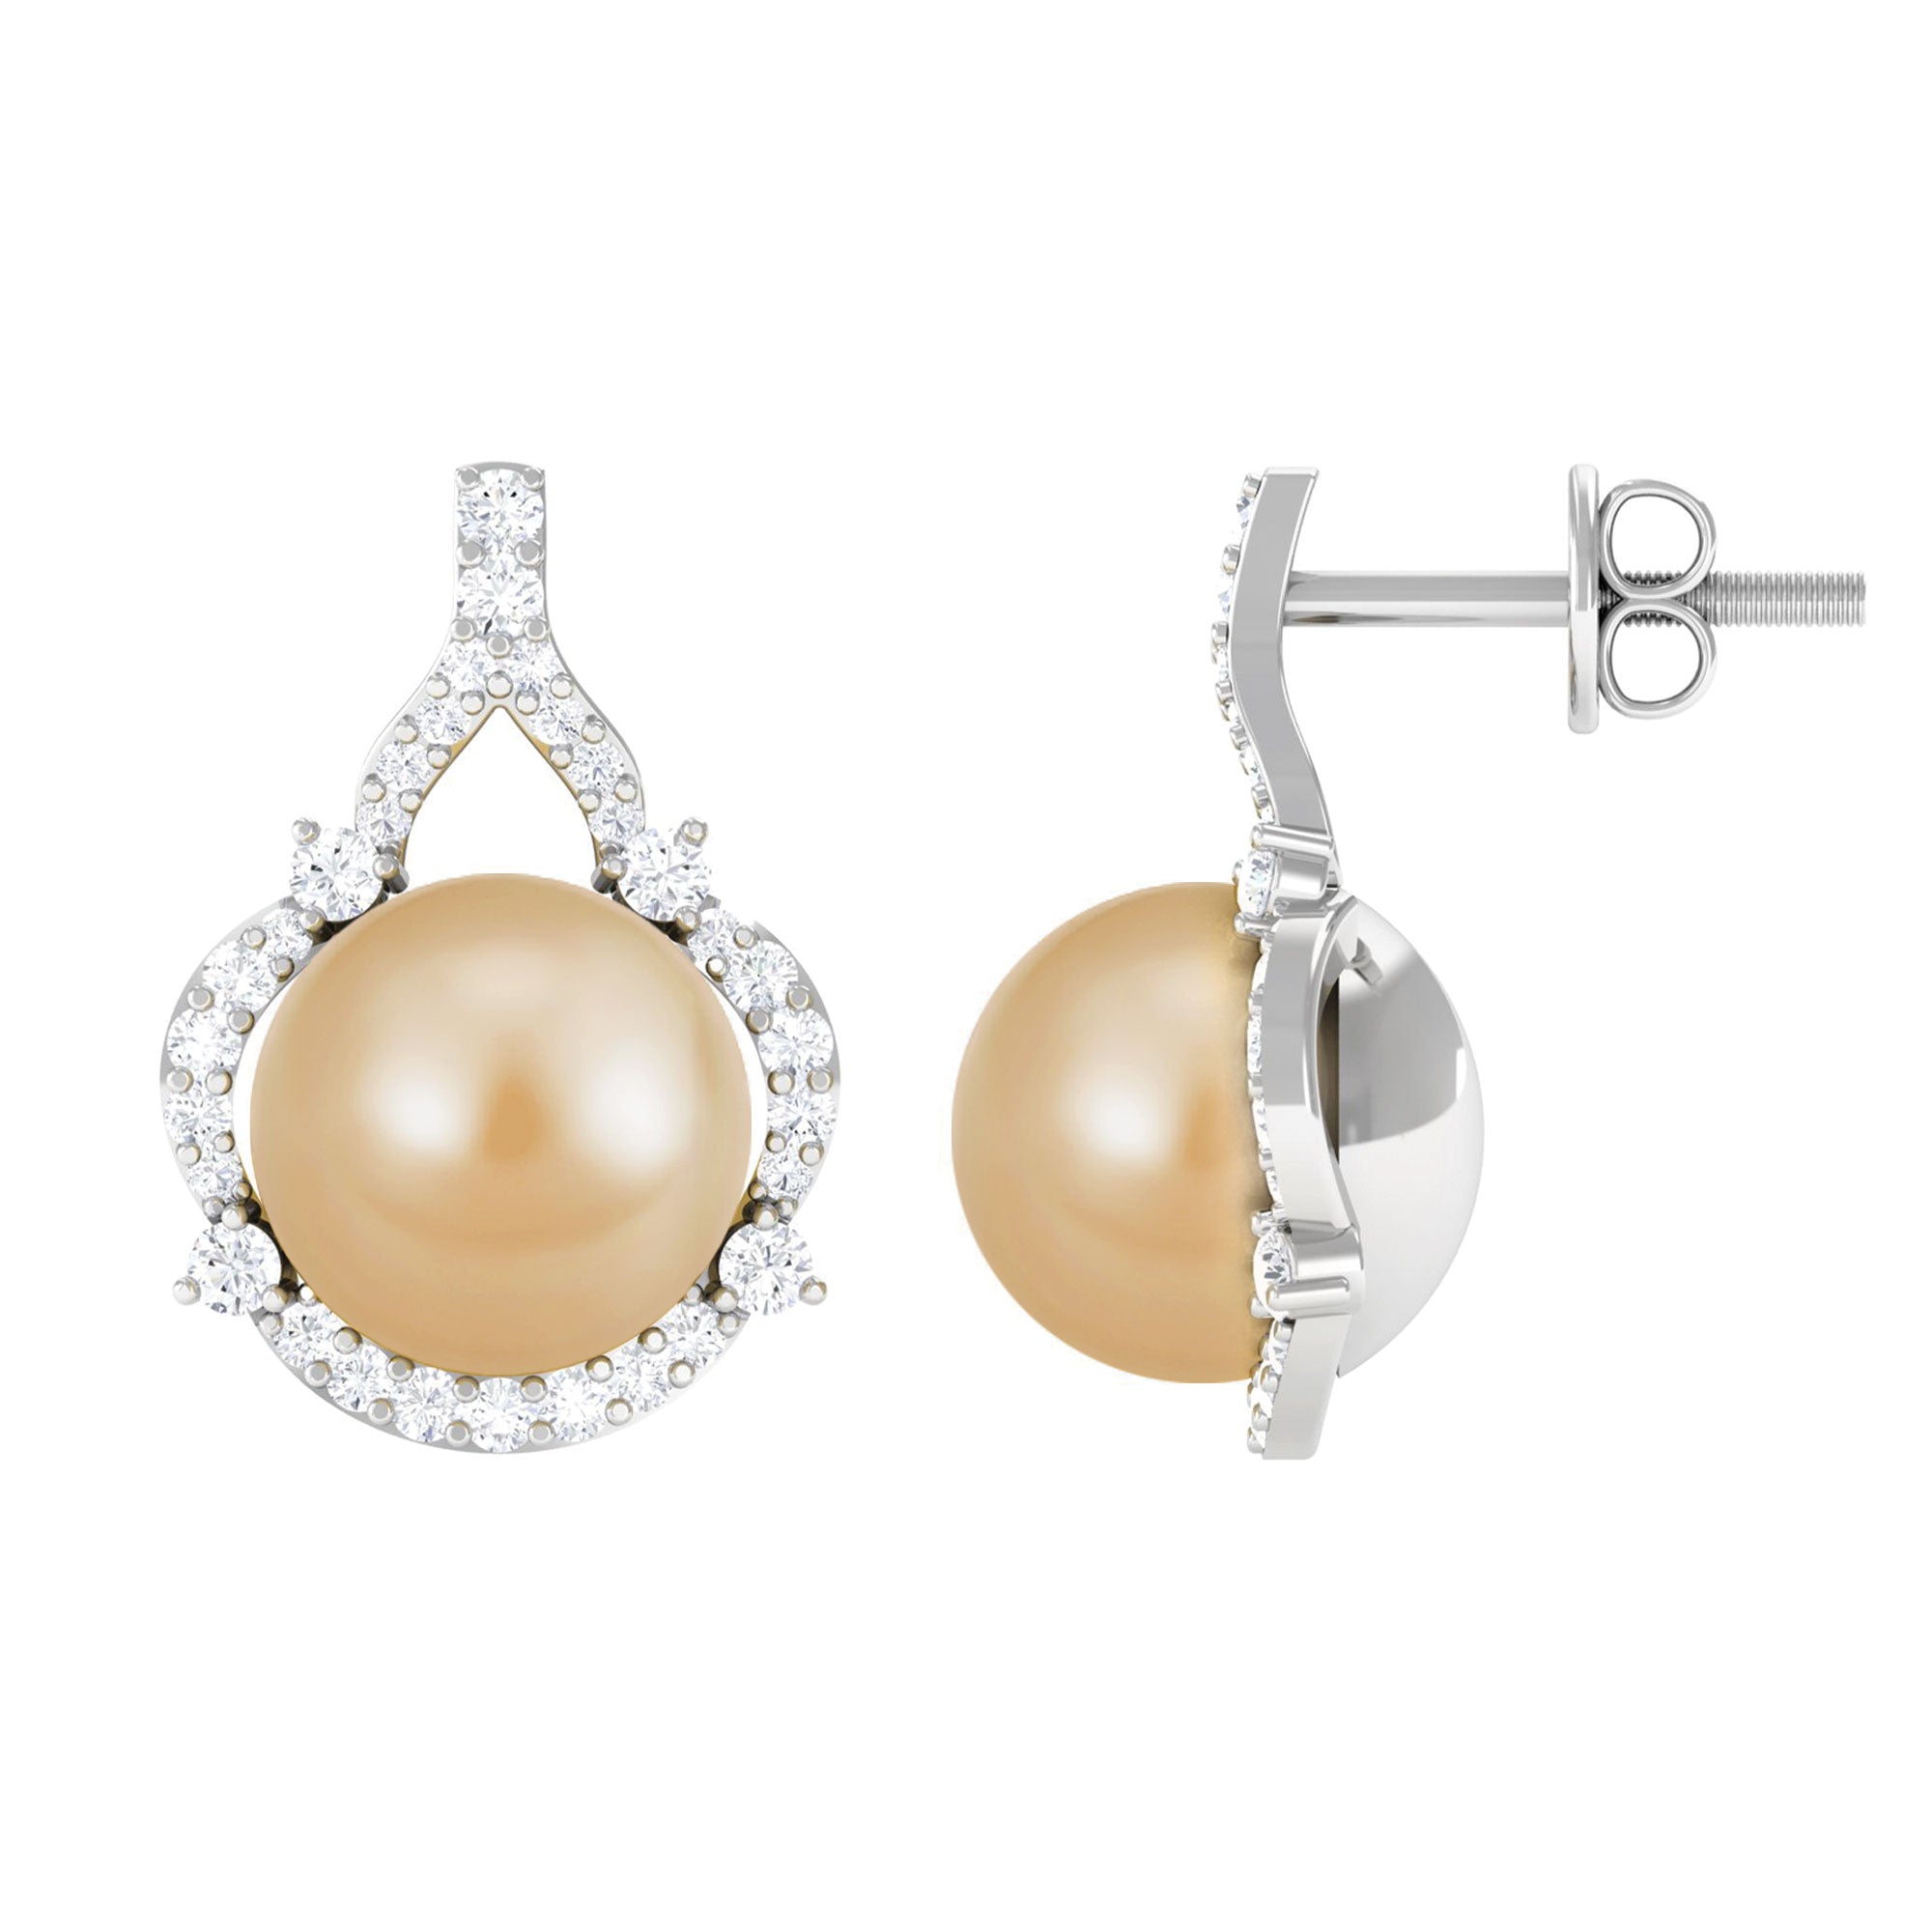 Vintage Inspired South Sea Pearl Drop Earrings with Diamond South Sea Pearl-AAA Quality - Arisha Jewels